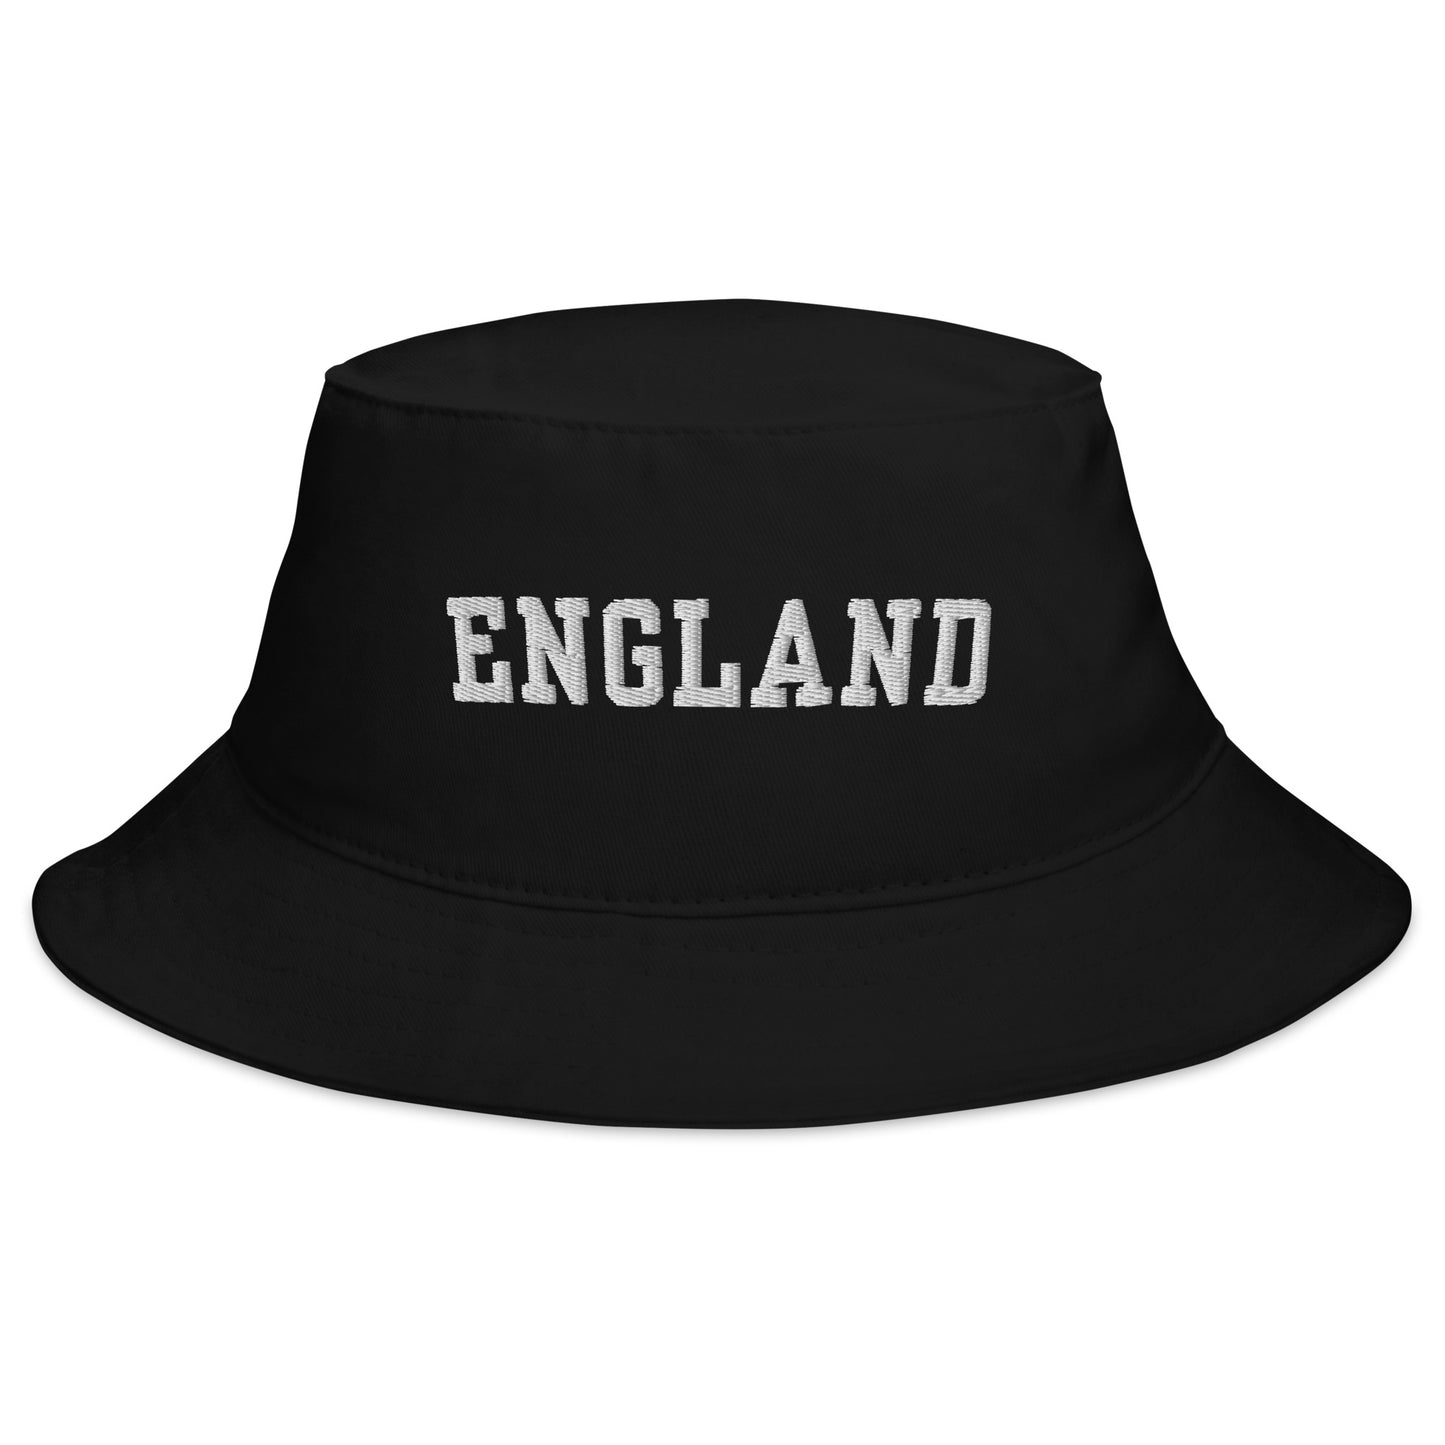 England Bucket Hat black